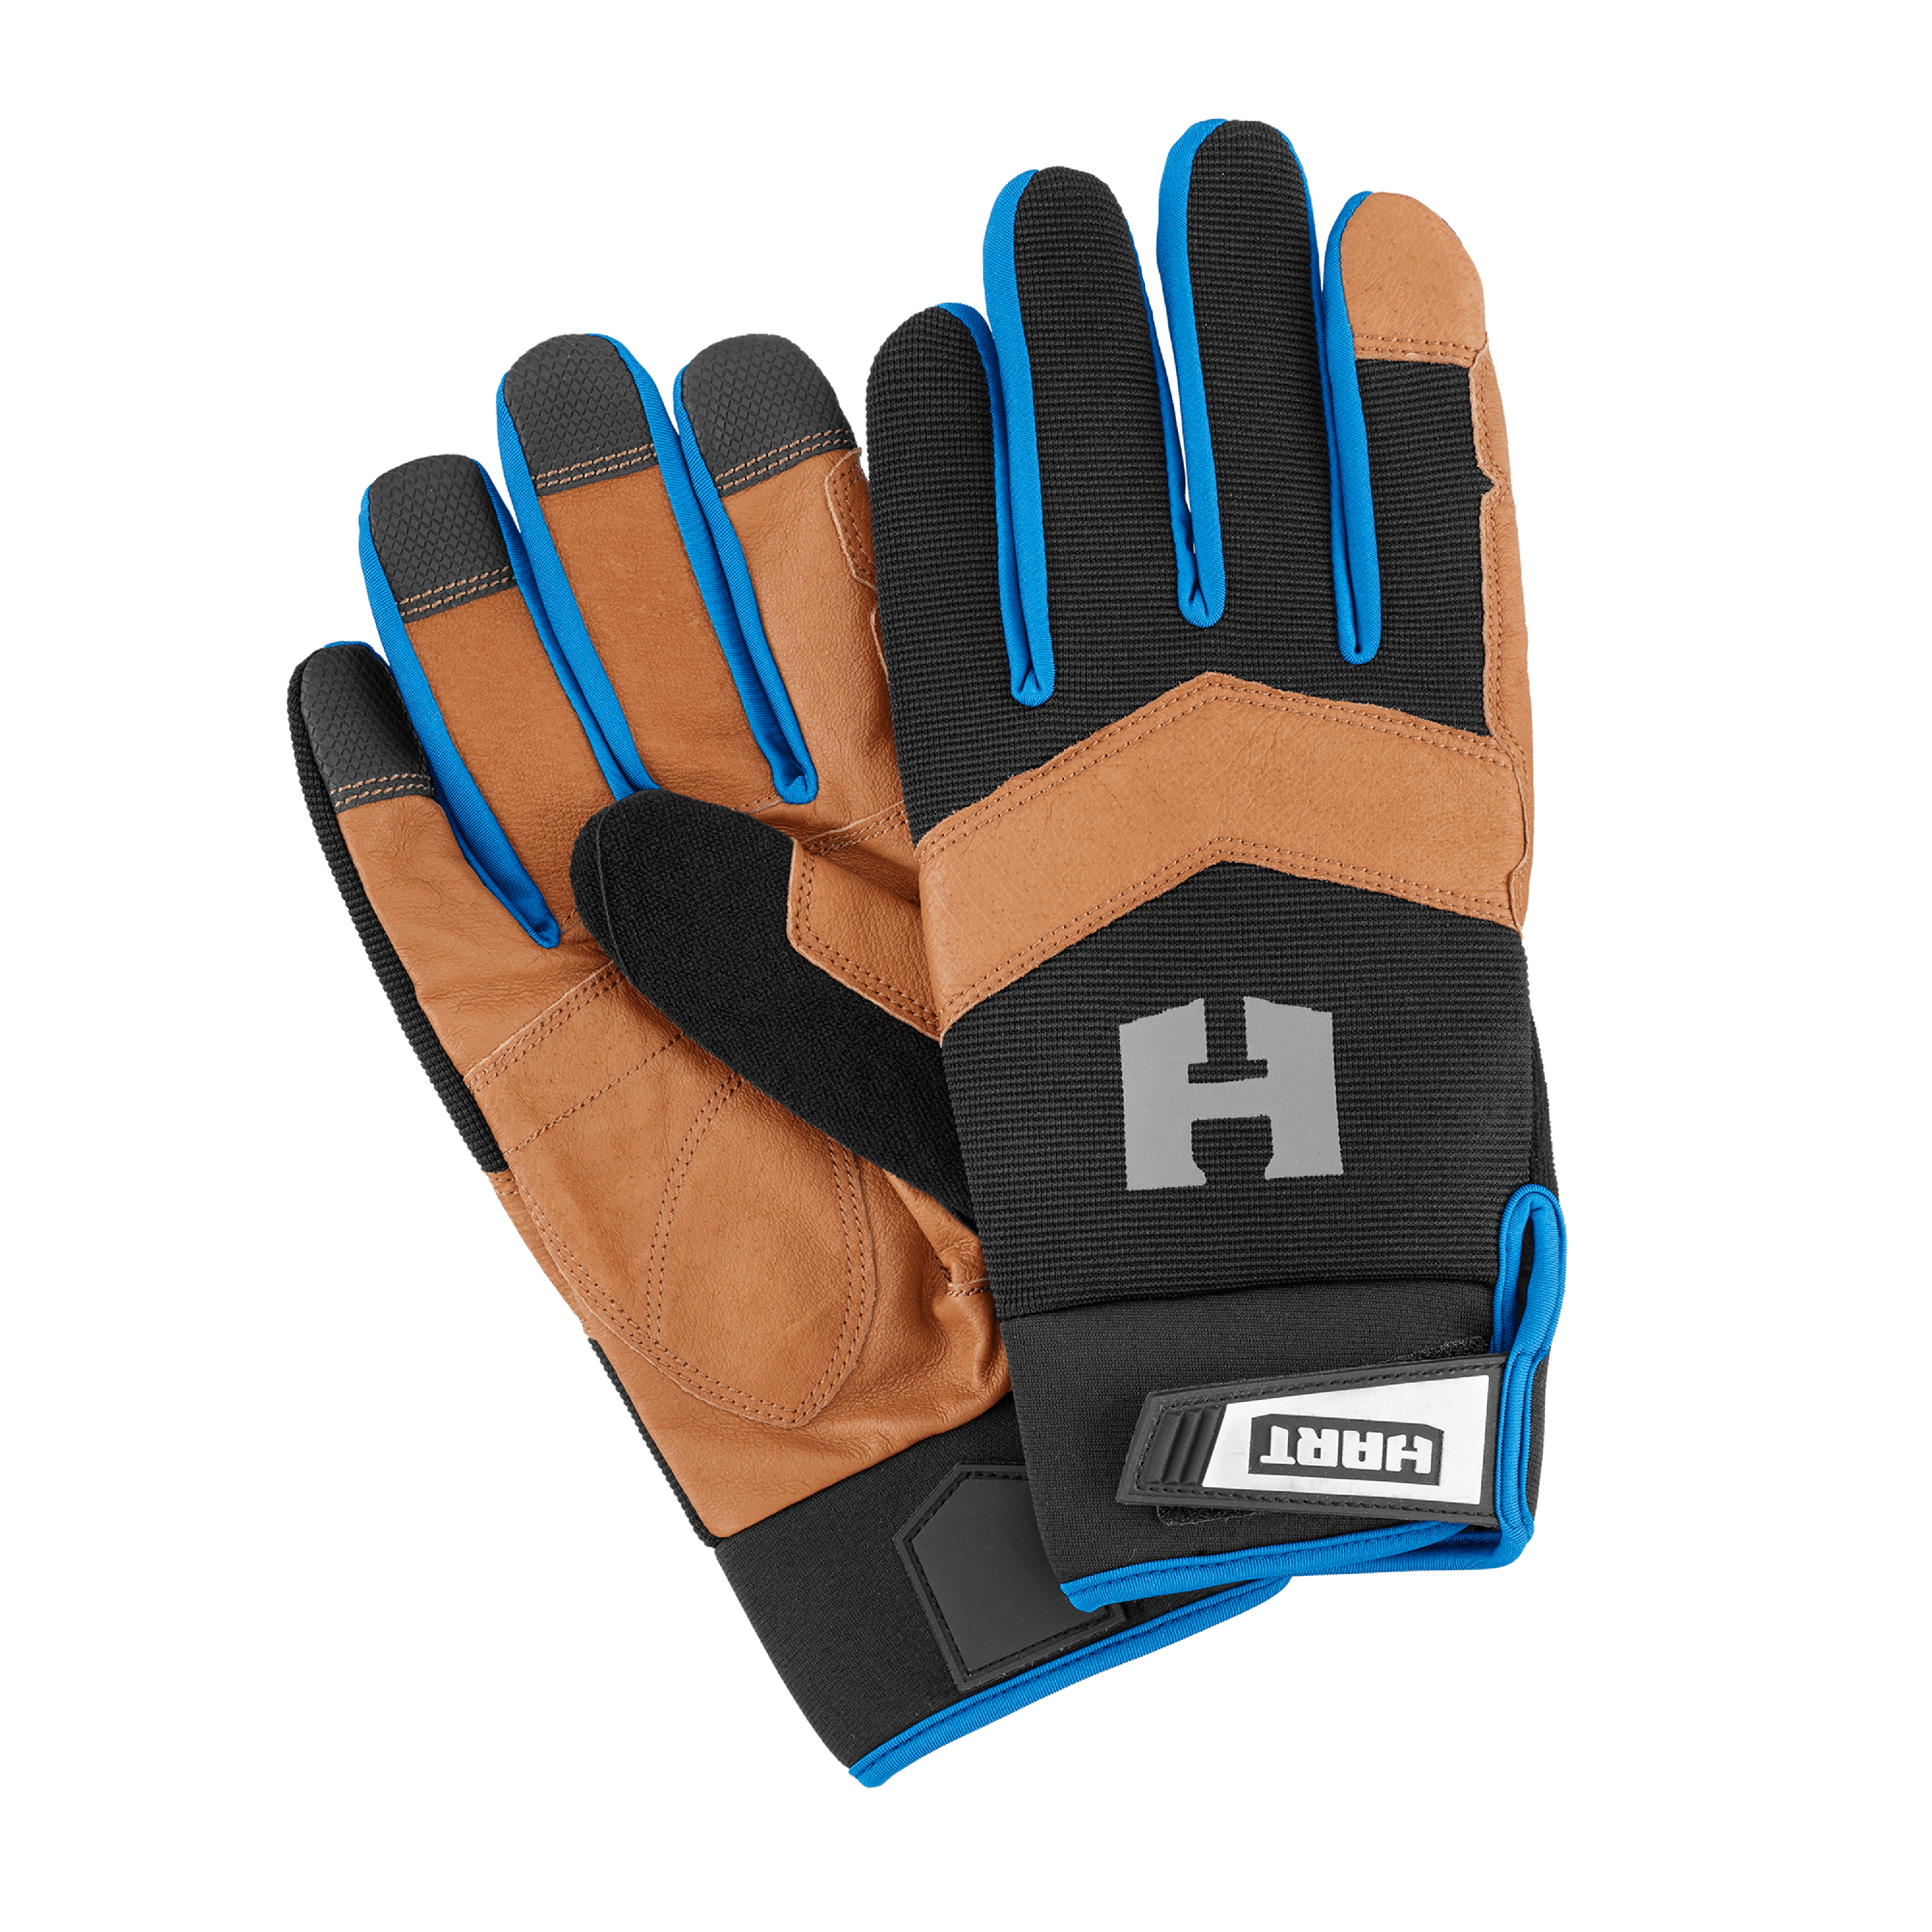 NEW Heavy Duty Tan Mechanics Work Gloves Reinforced Palm Synthetic Leather 